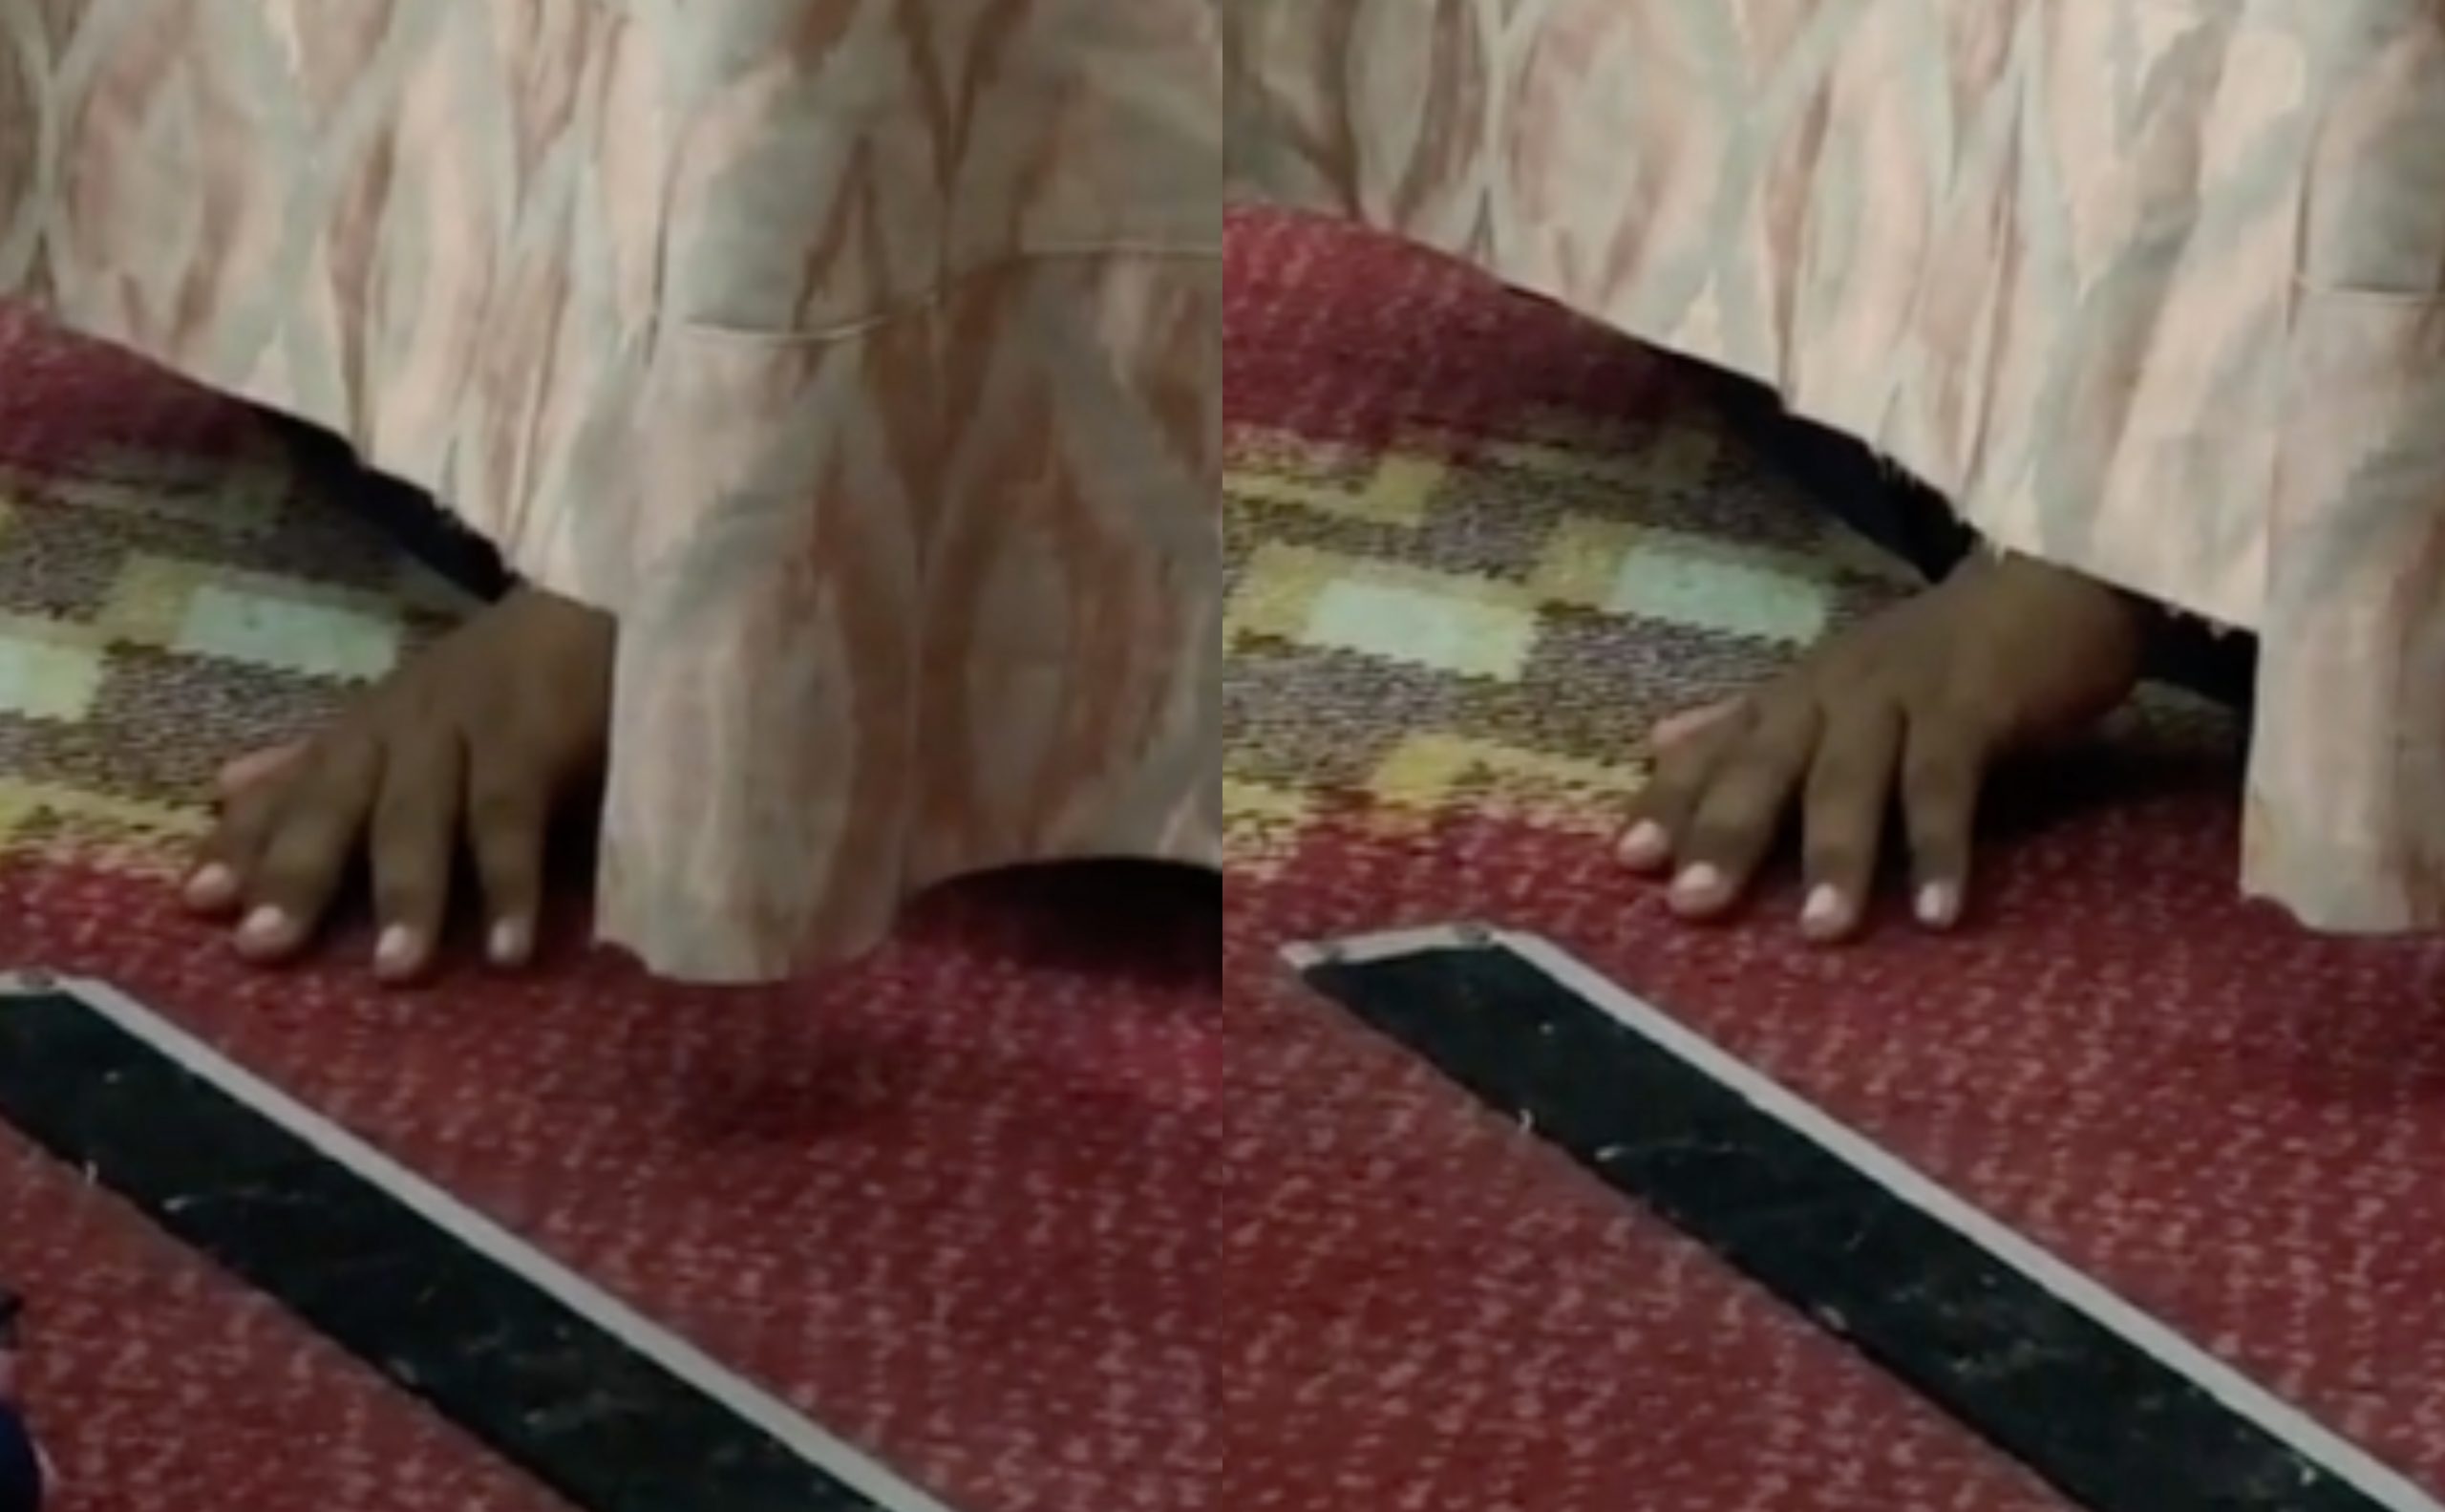 [VIDEO] Aksi Gatal Tangan Lelaki ‘Meraba’ Dekat Langsir Pemisah Ruang Solat Wanita Dikecam